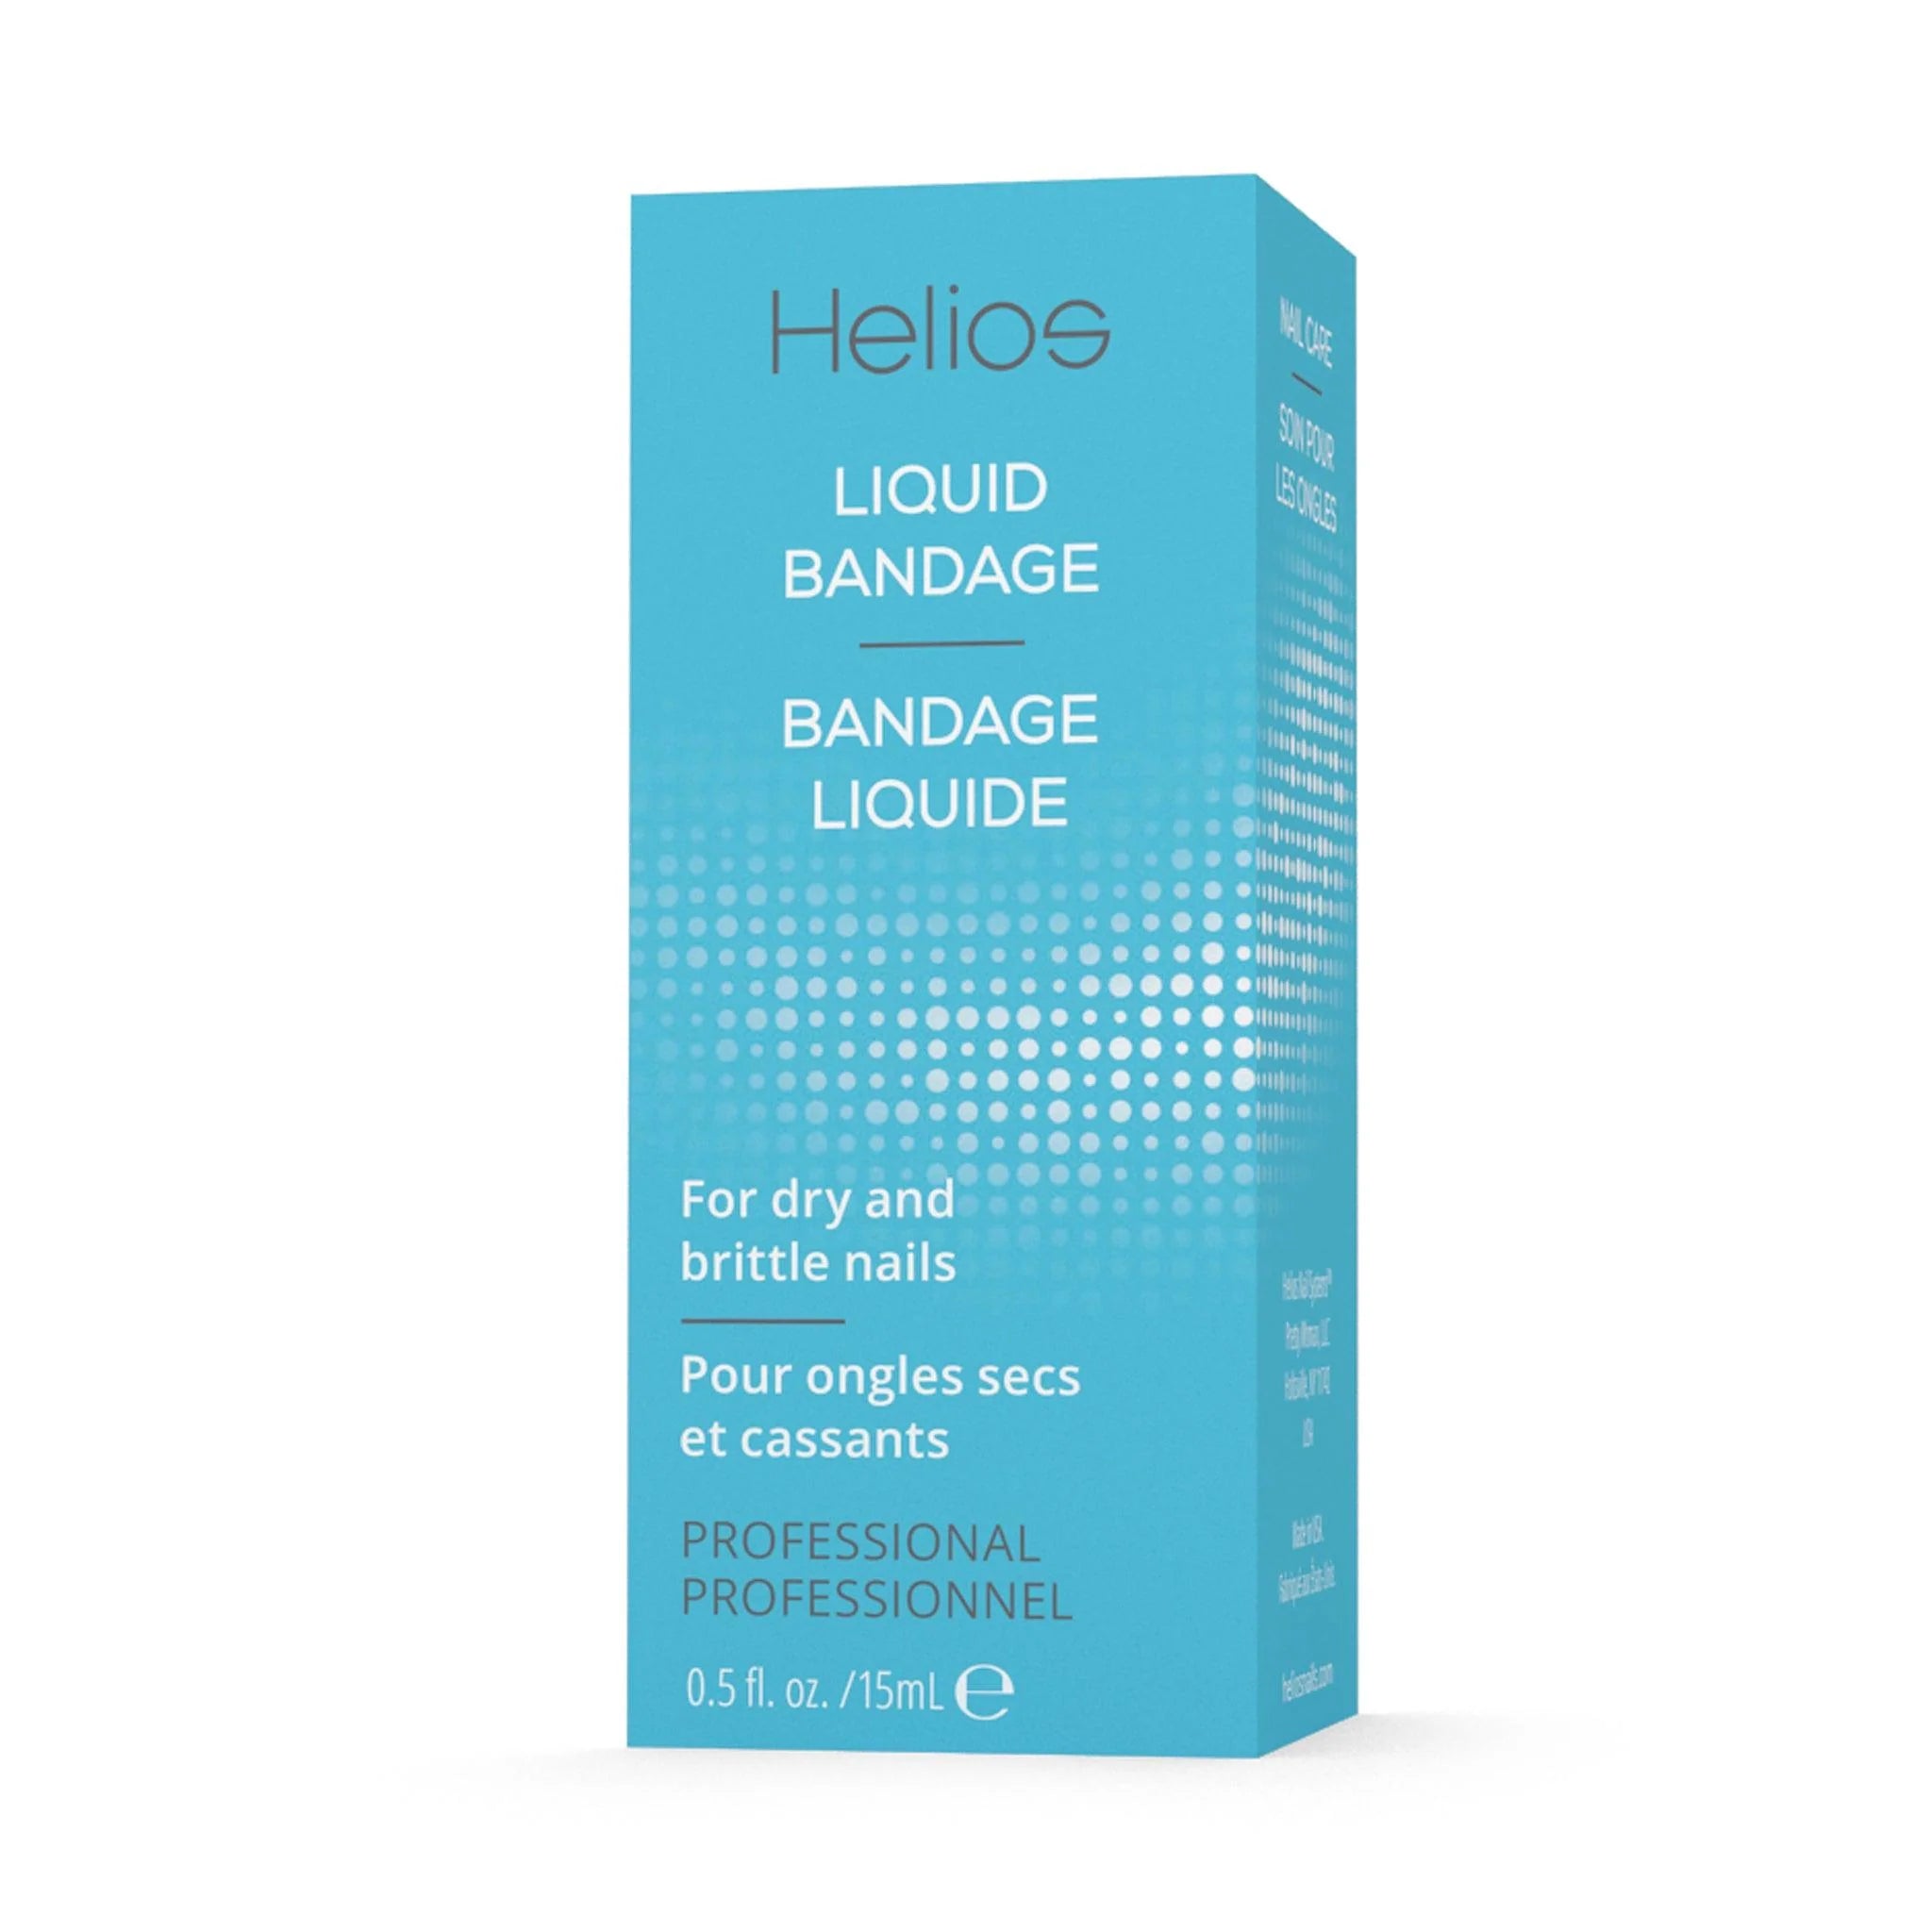 Helios - Liquid Bandage - Creata Beauty - Professional Beauty Products